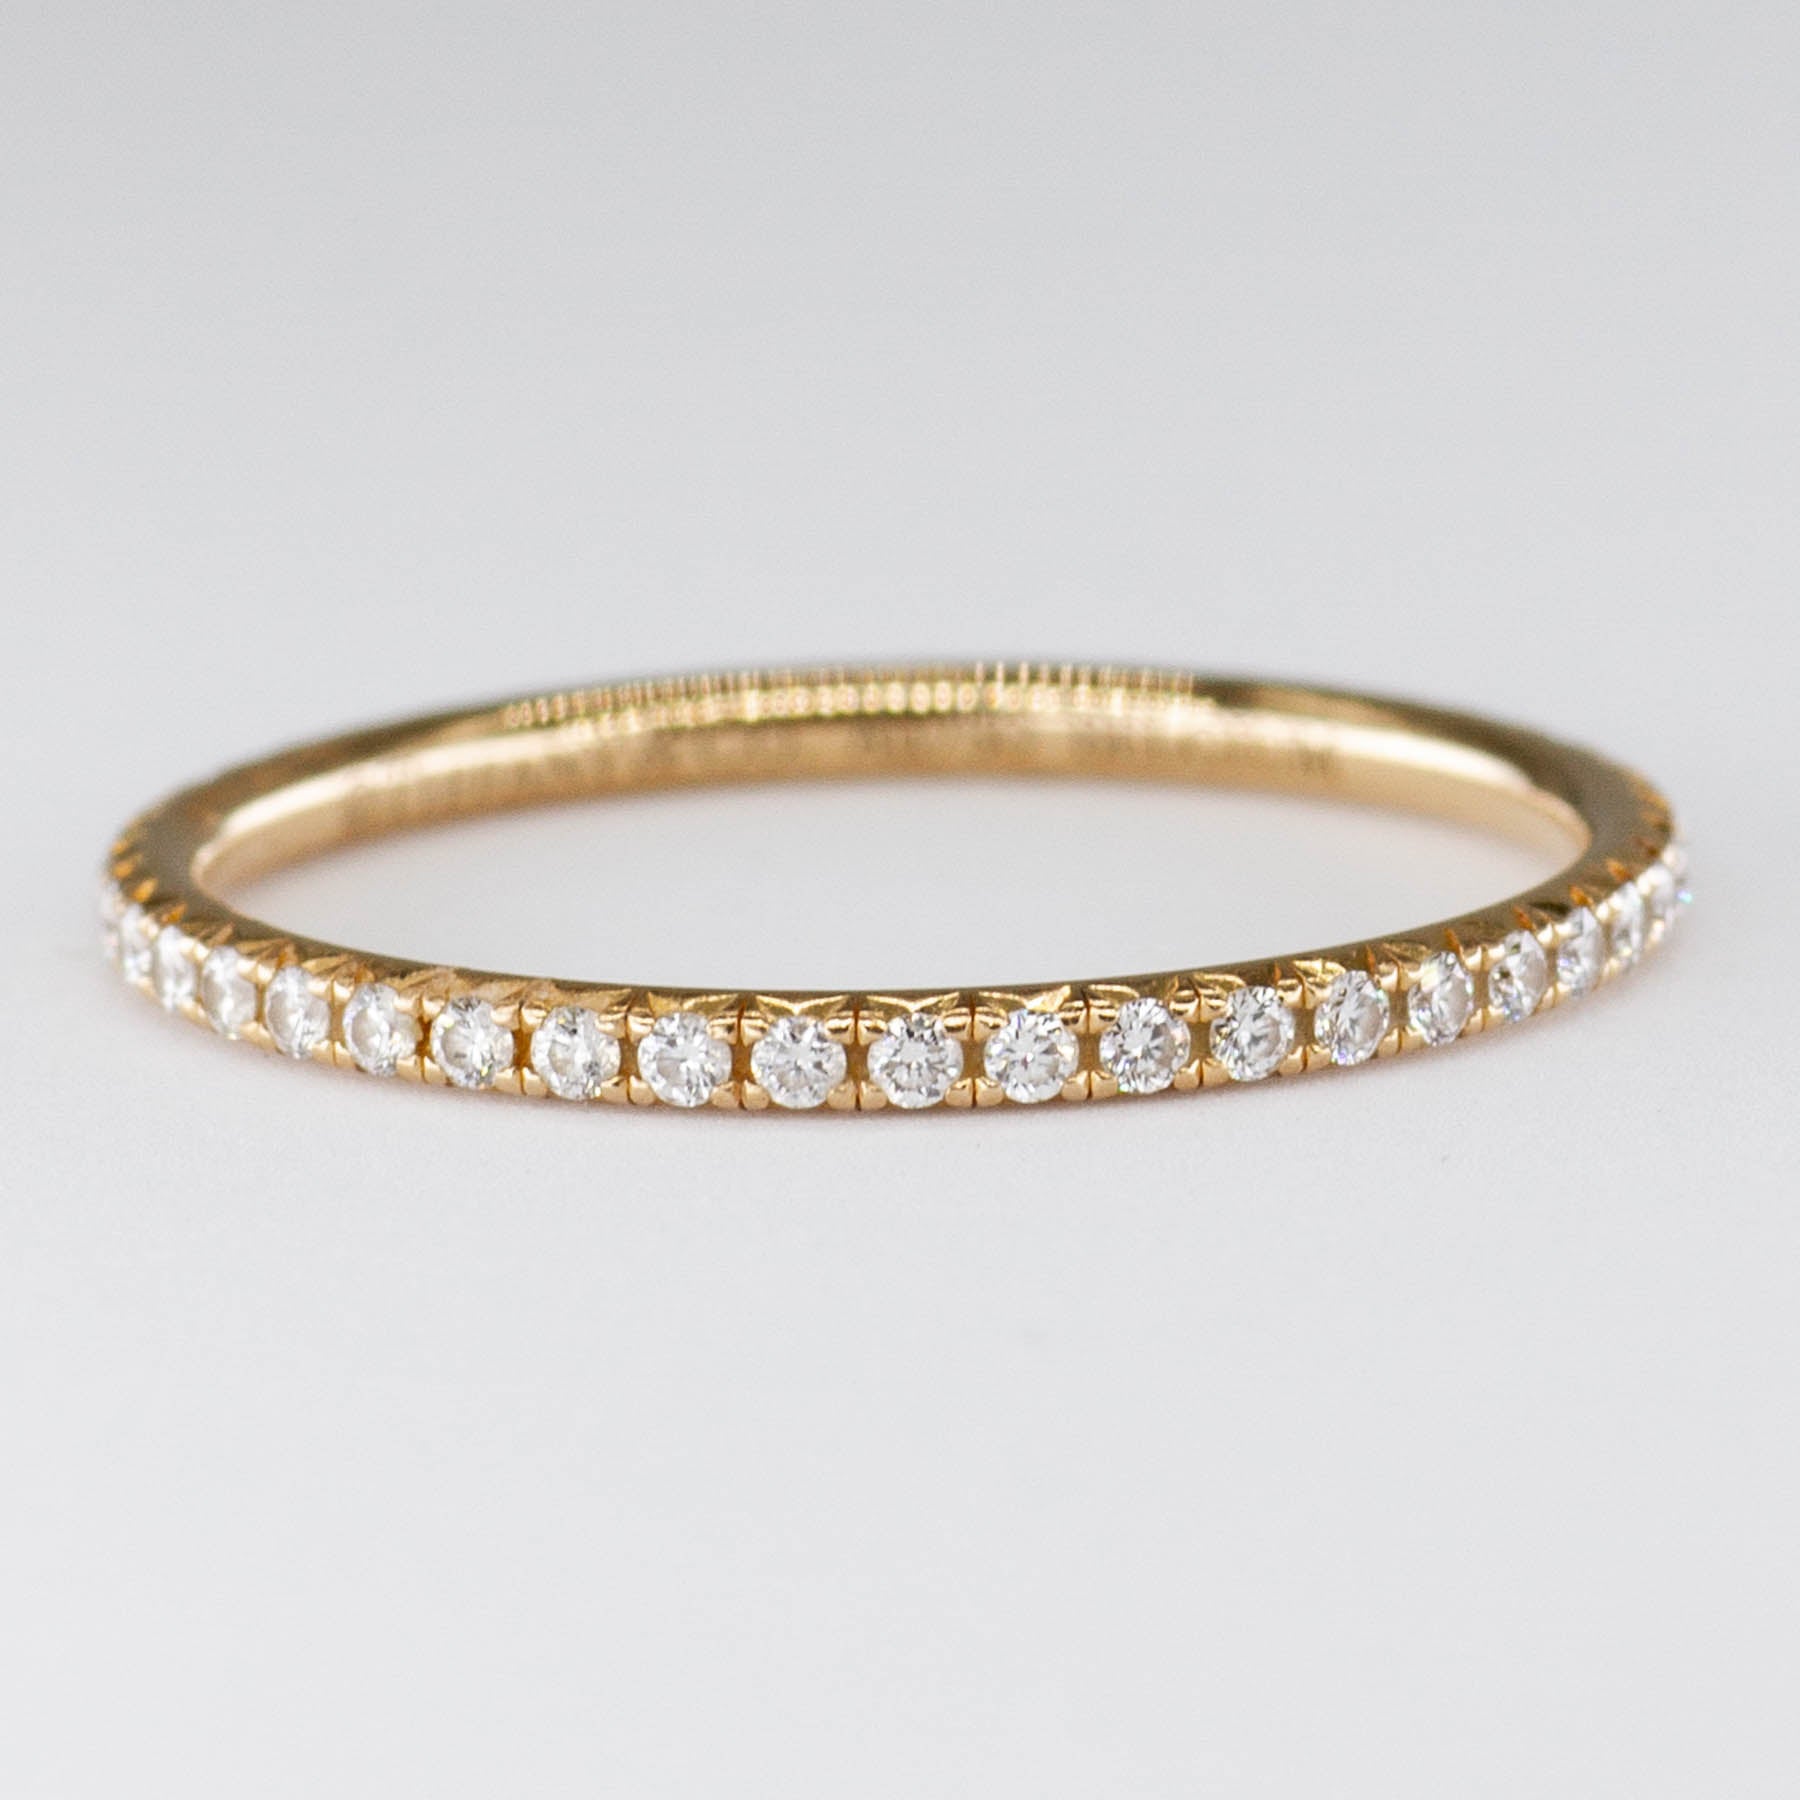 'Tiffany & Co.' Metro 18k Rose Gold Diamond Ring | 0.22ctw | SZ 6.5 - 100 Ways